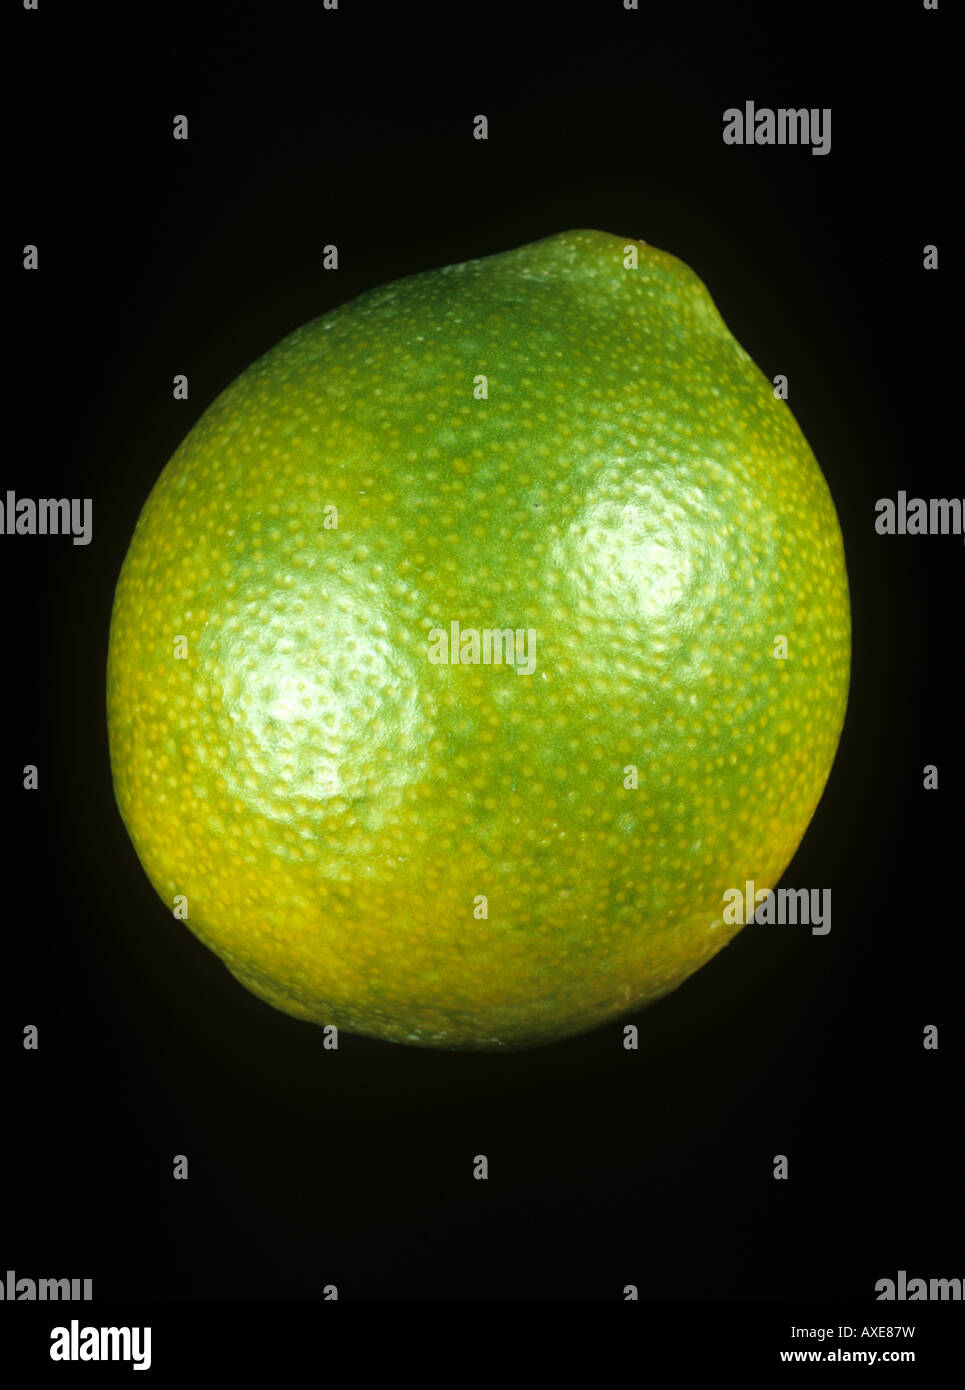 Whole limequat fruit a hybrid between line and kumquat variety Eustis Limequat Stock Photo